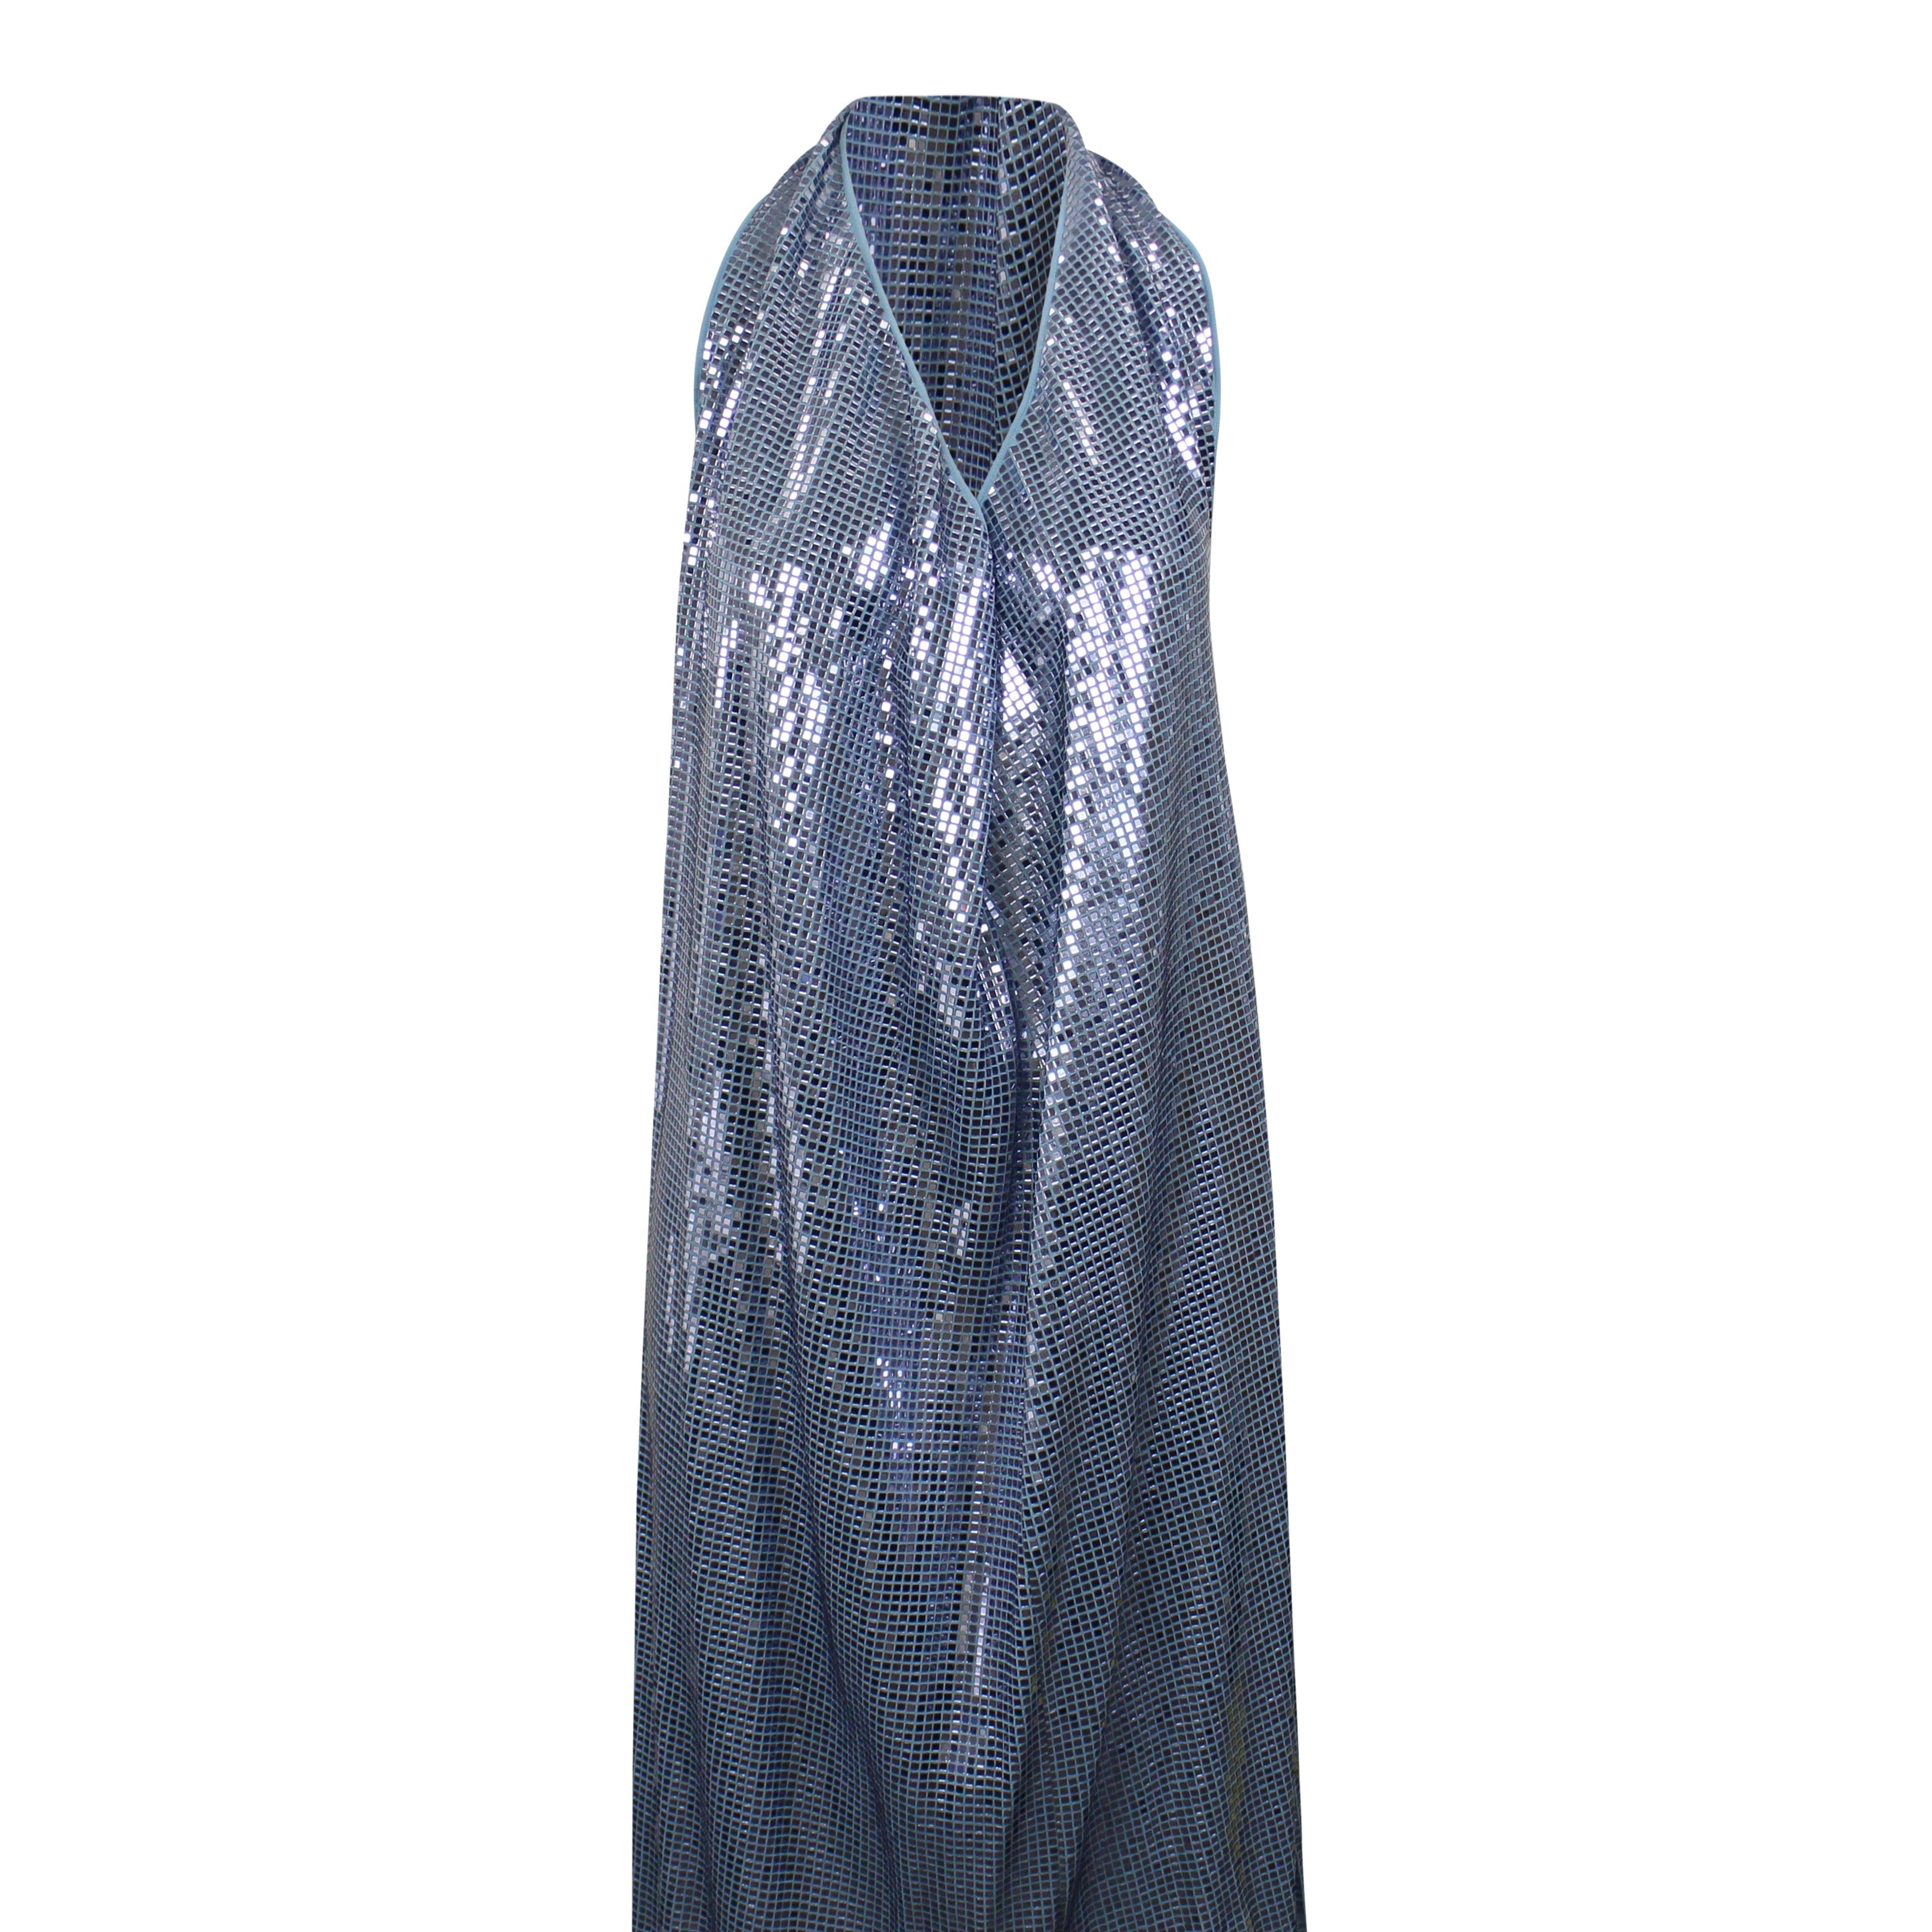 Alternate View 1 of Light Blue Halter Sequin Mid Dress